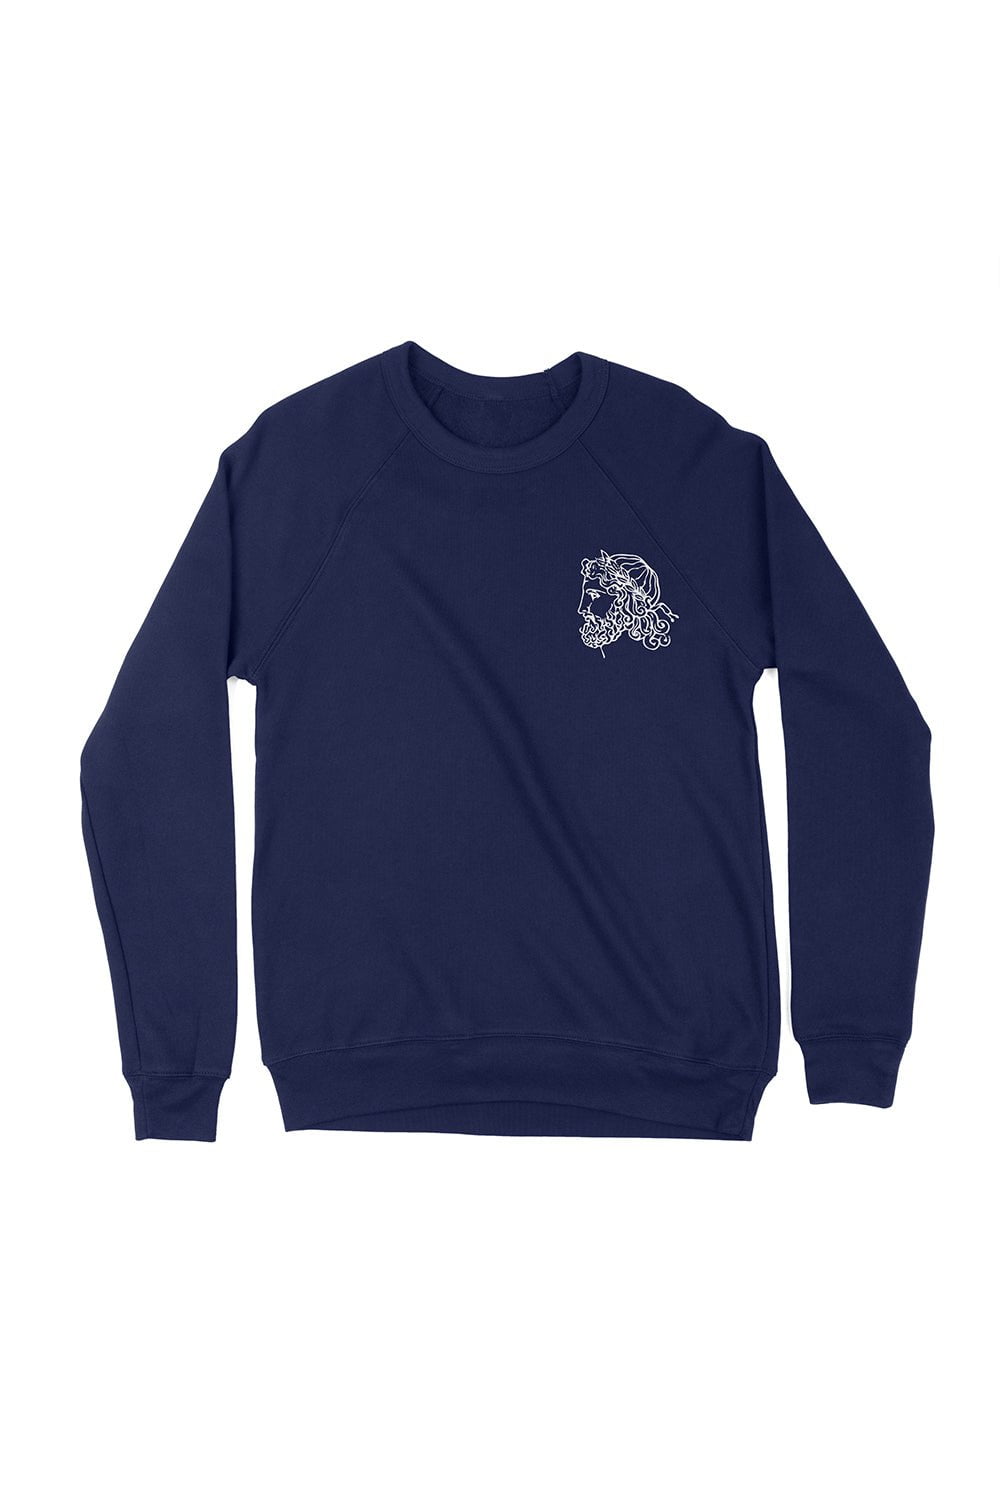 Sarah Marie Design Studio Sweatshirt Pheidippides Marathon Sweatshirt